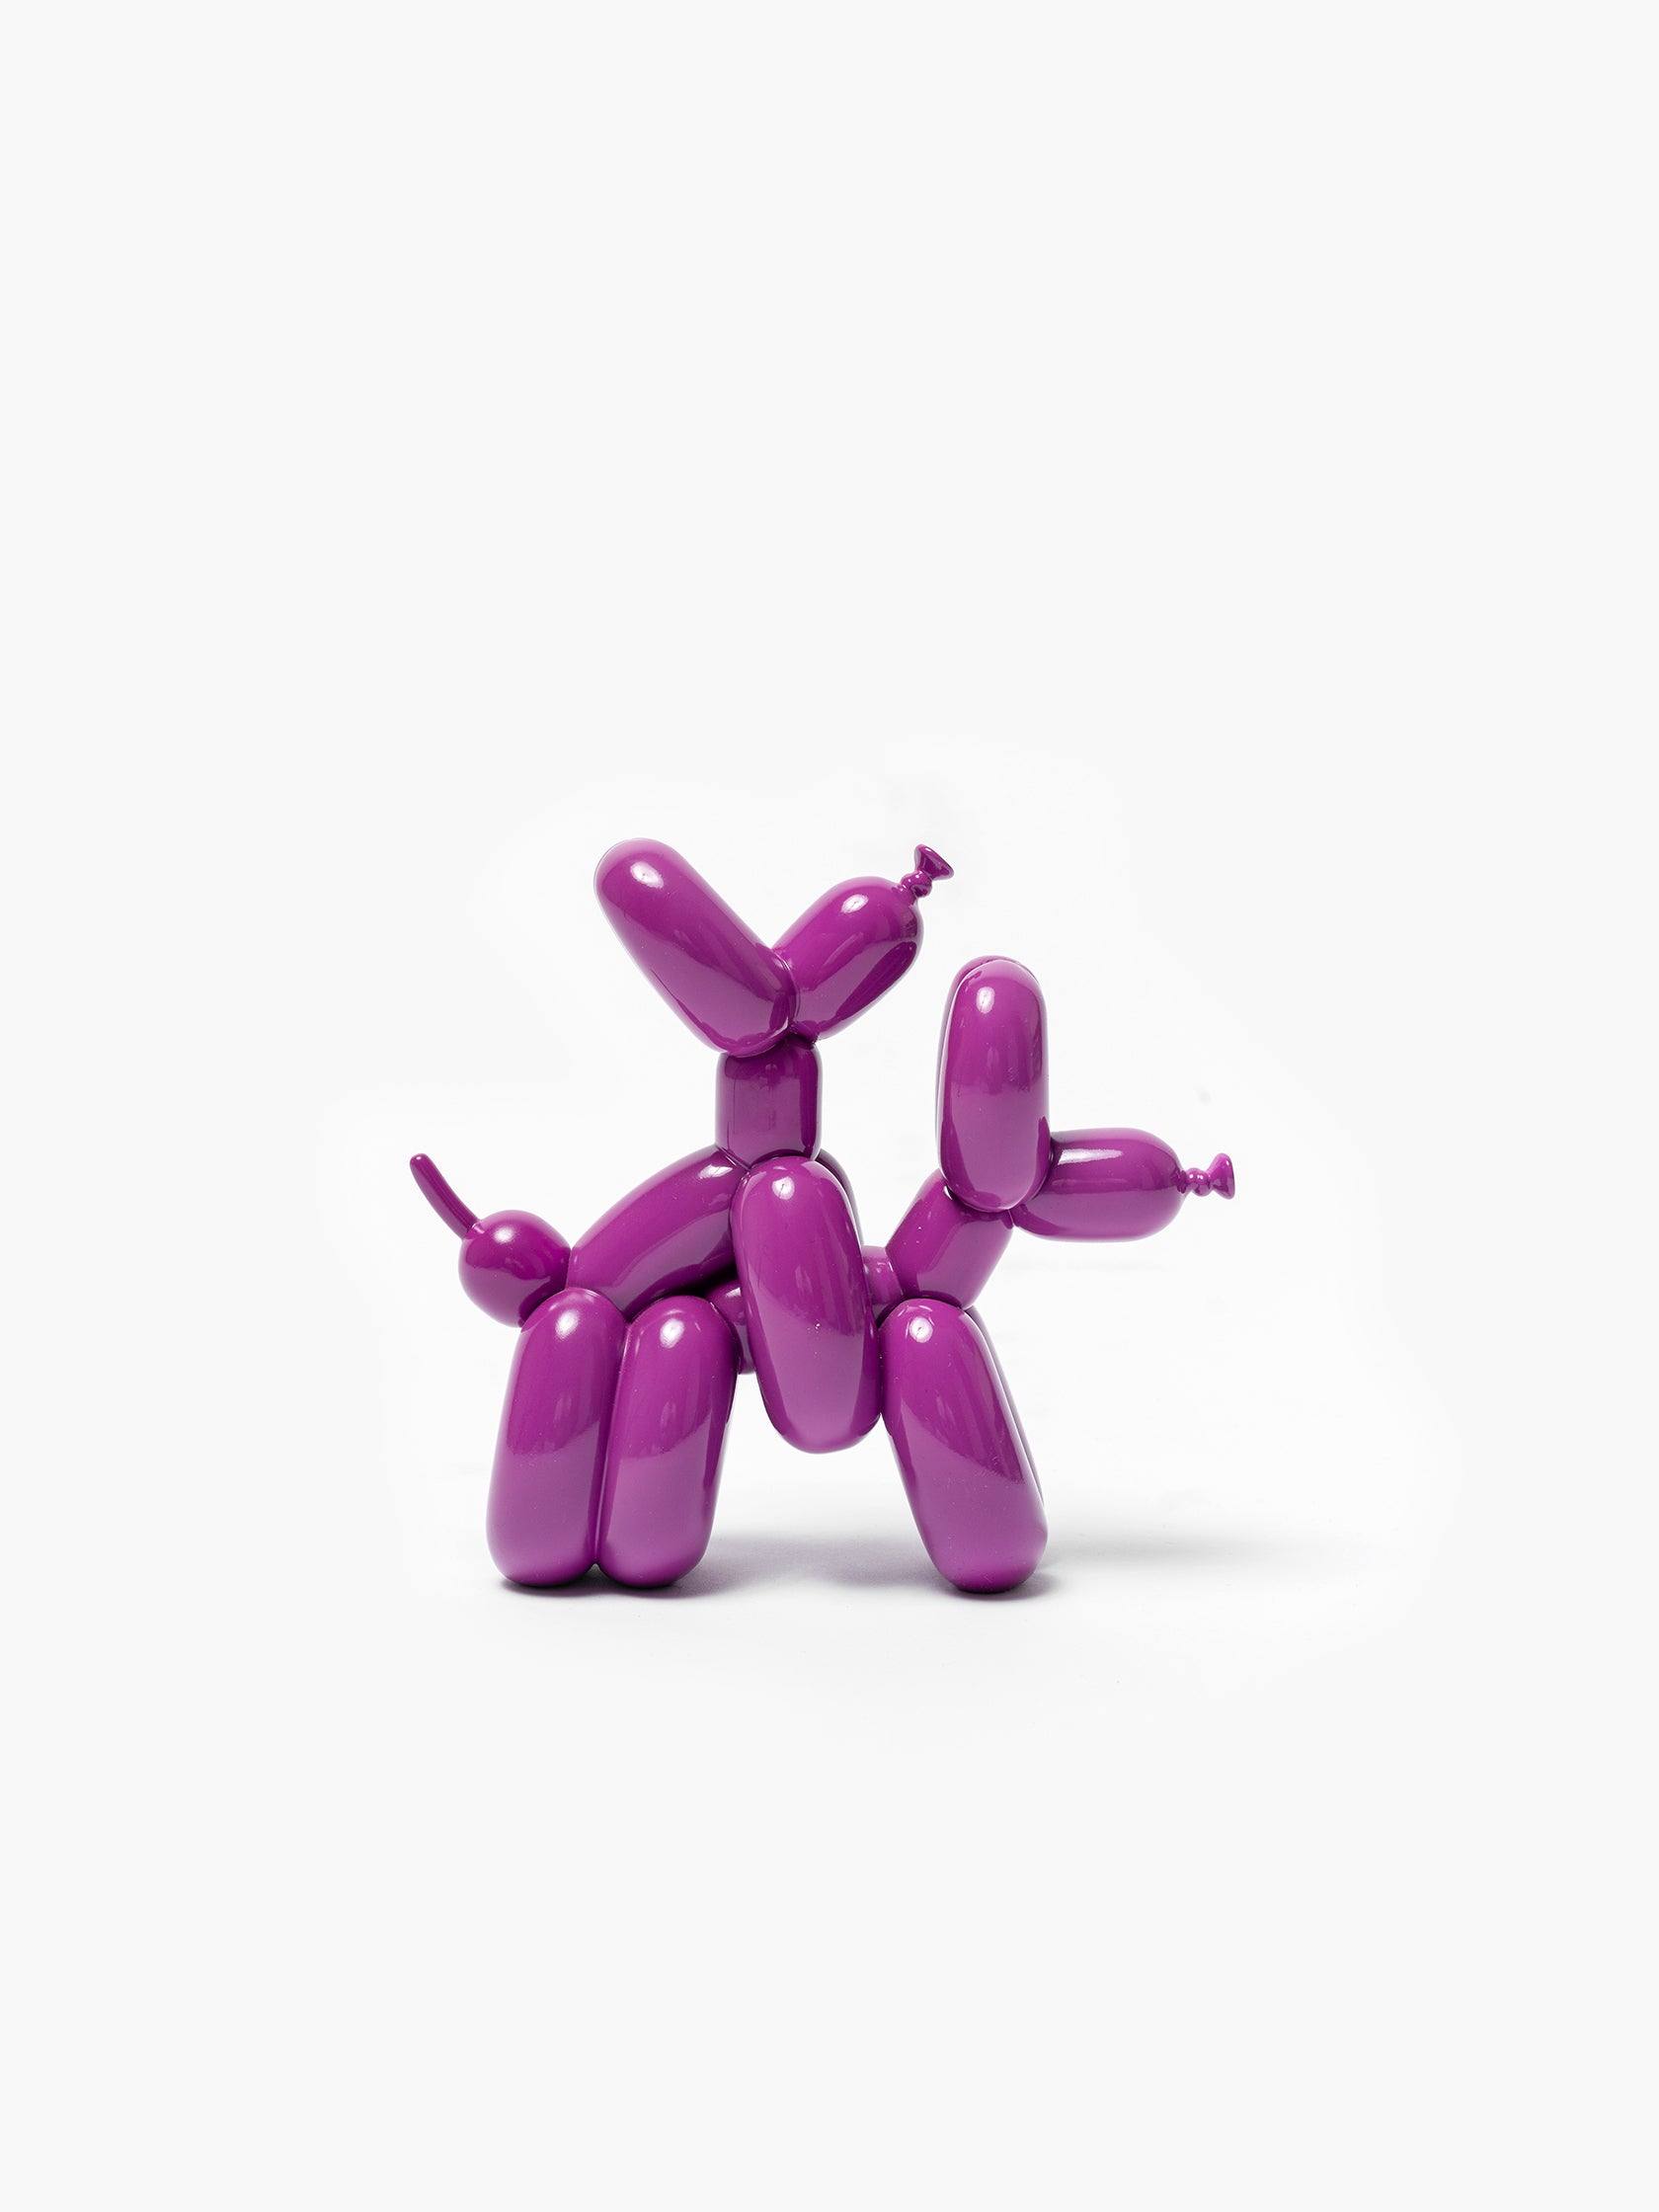 Humpek Balloon Dog mini Deep Purple by Whatshisname - Mankovsky Gallery